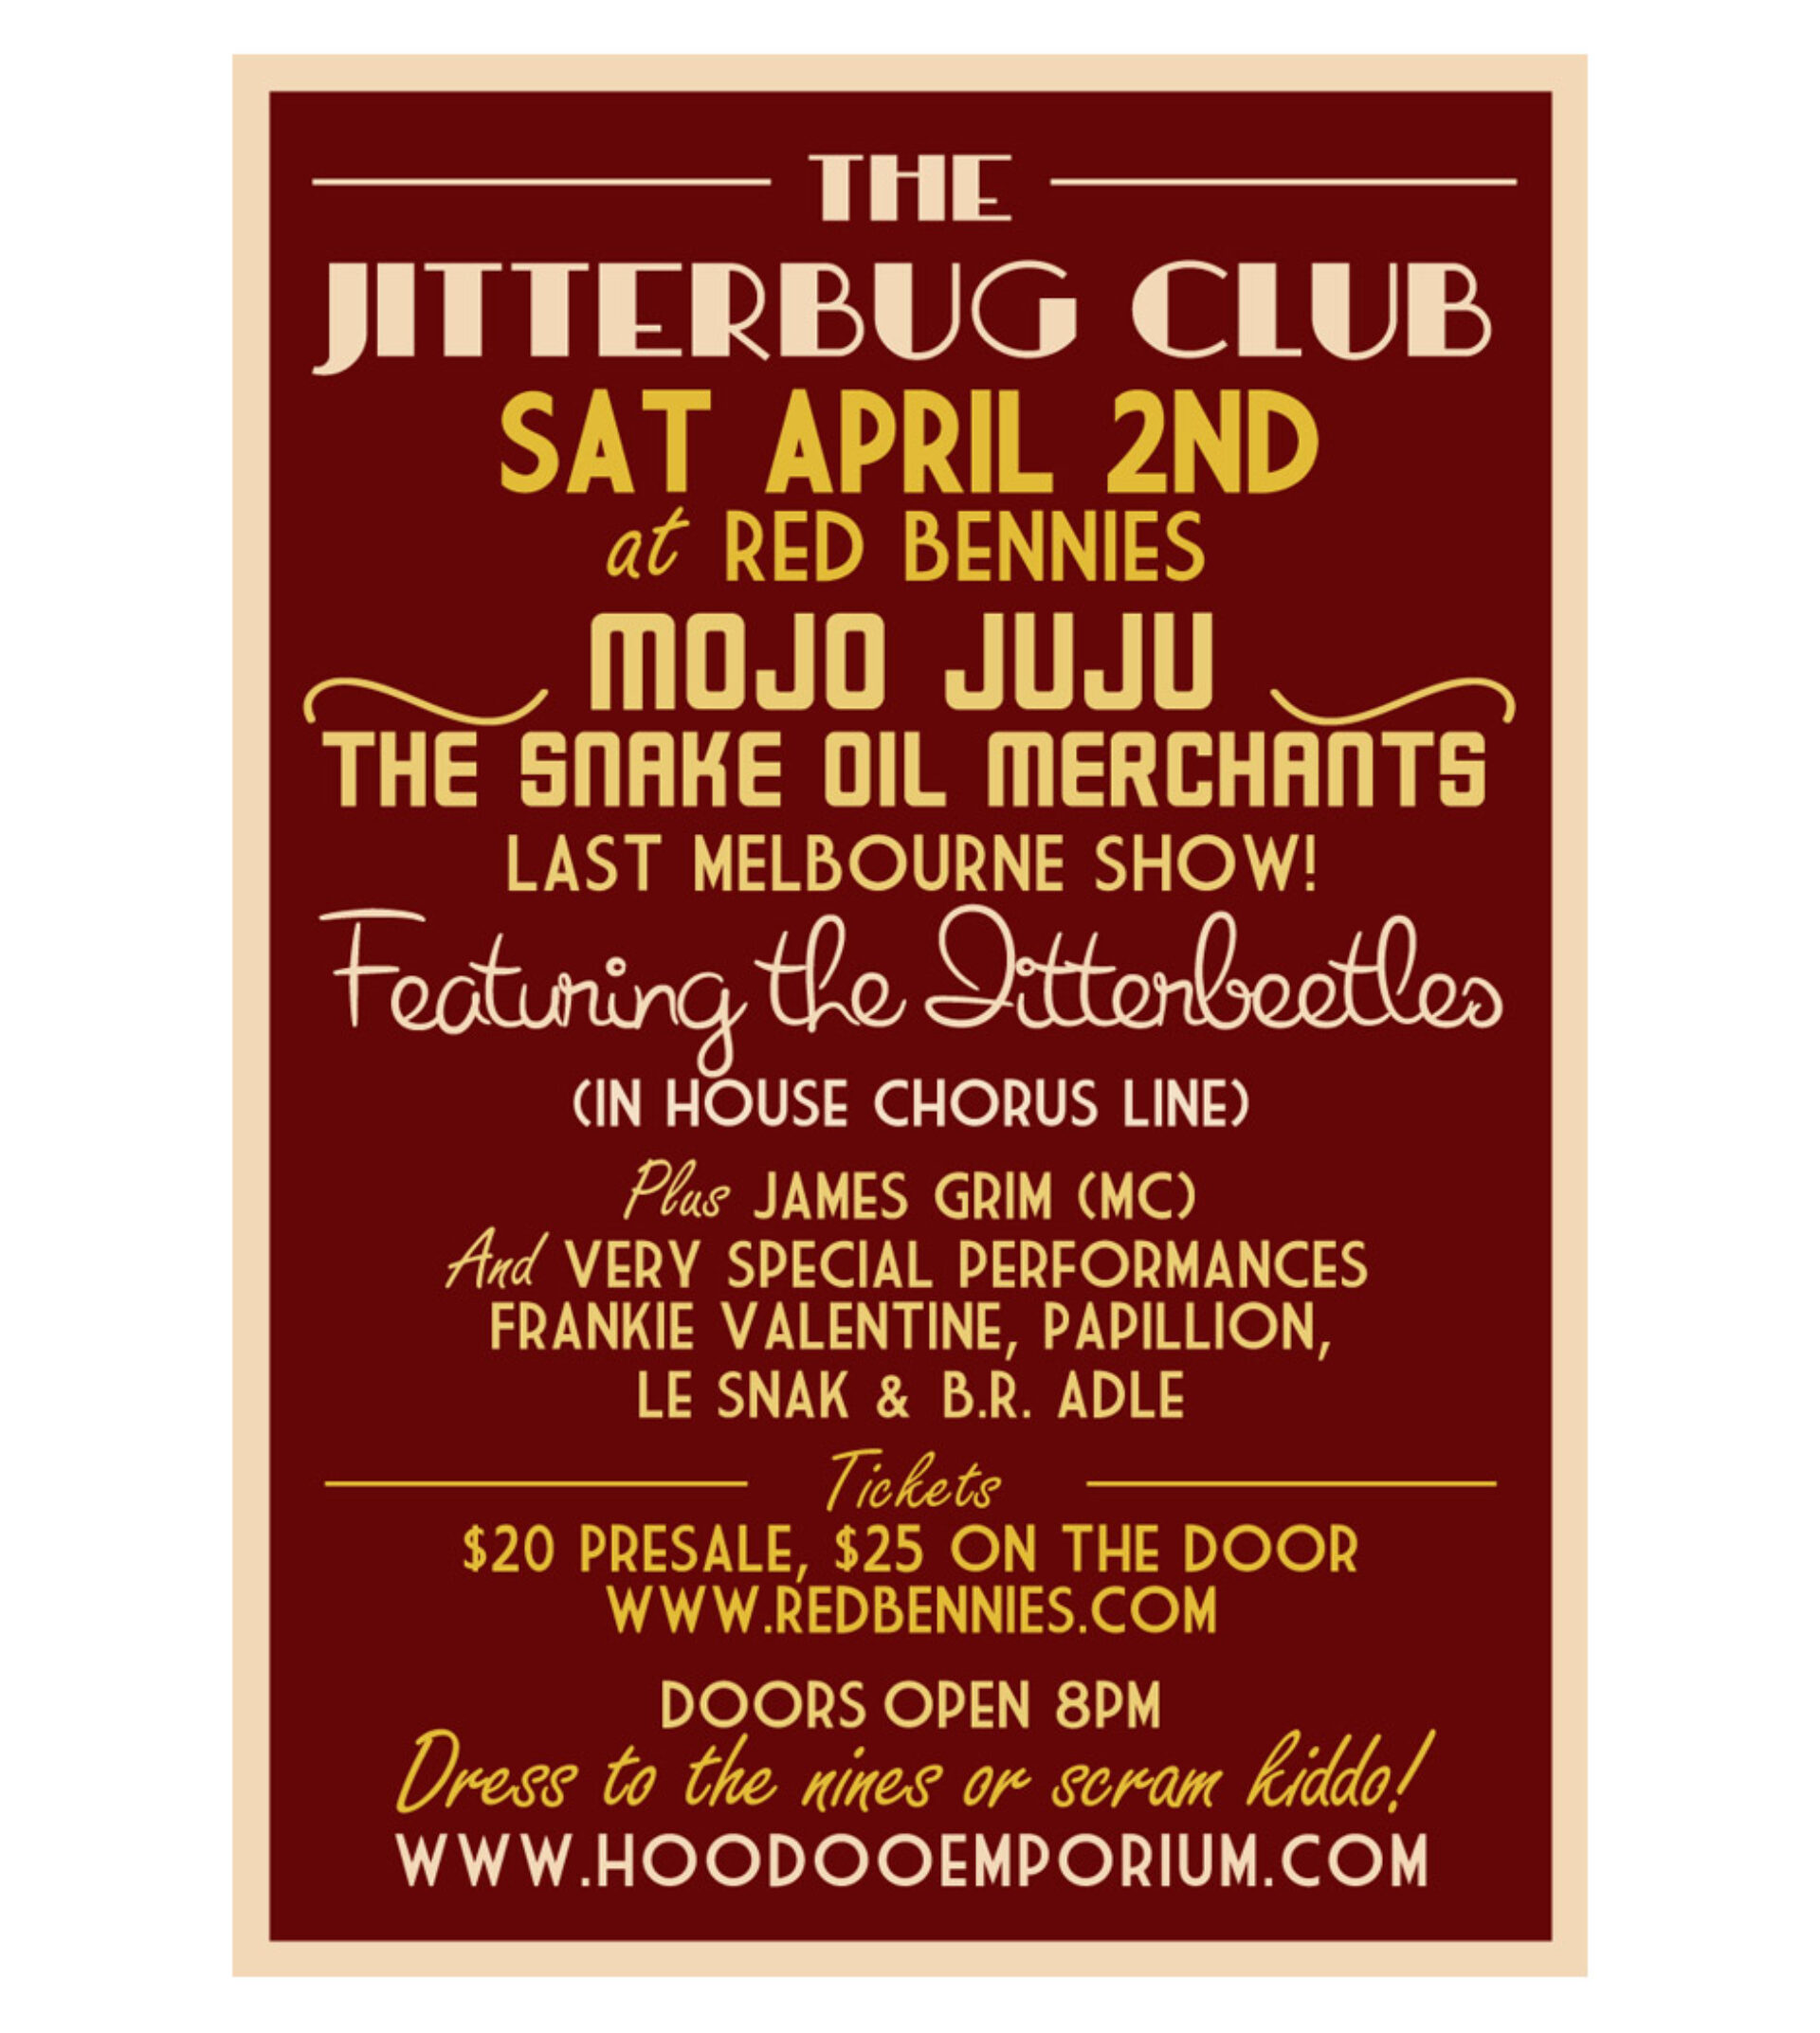 The jitterbug club 06